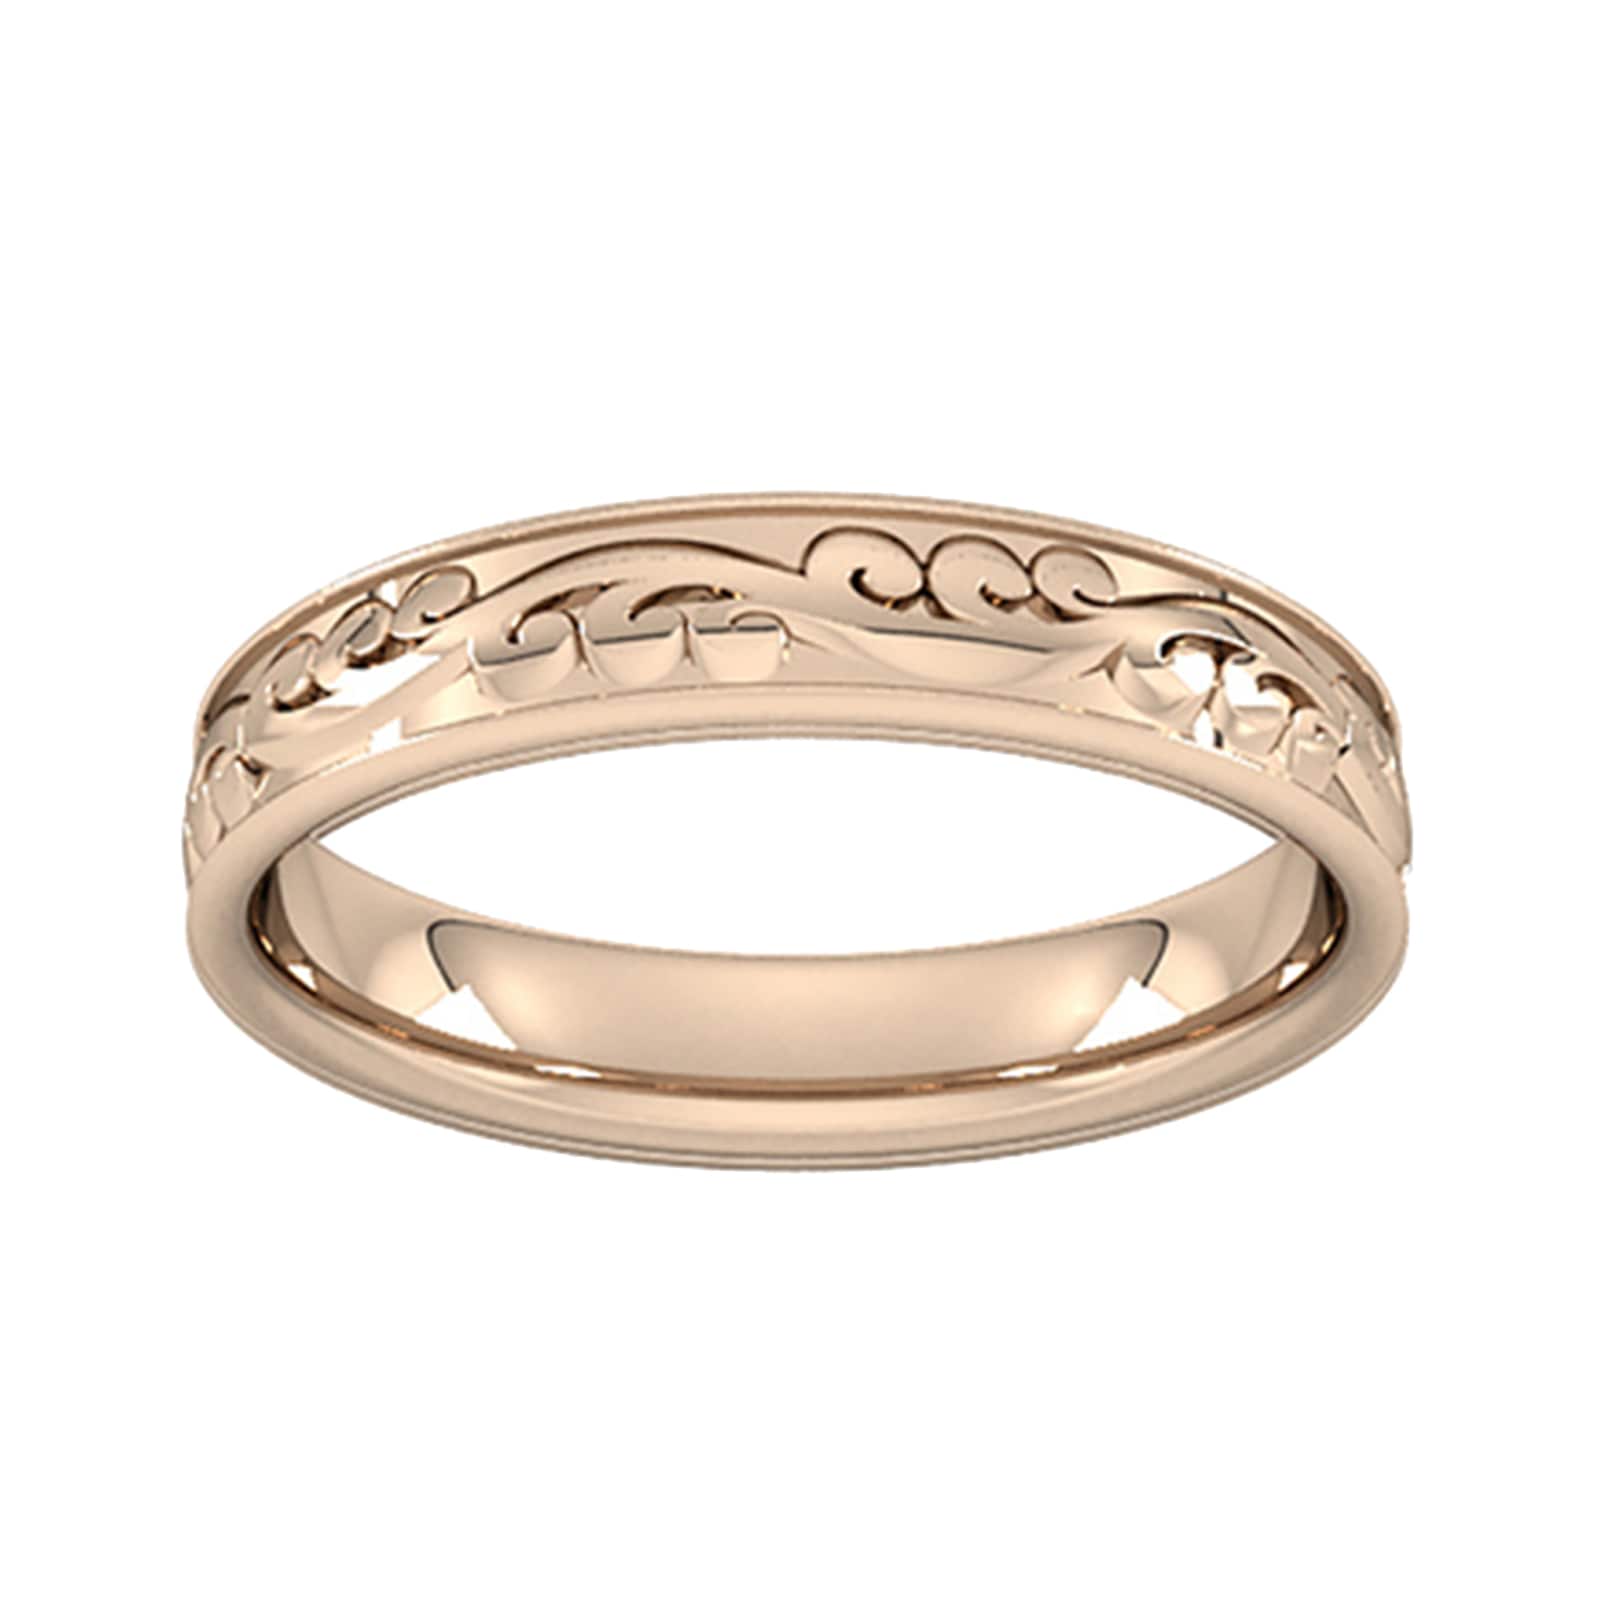 4mm Hand Engraved Wedding Ring In 9 Carat Rose Gold - Ring Size U